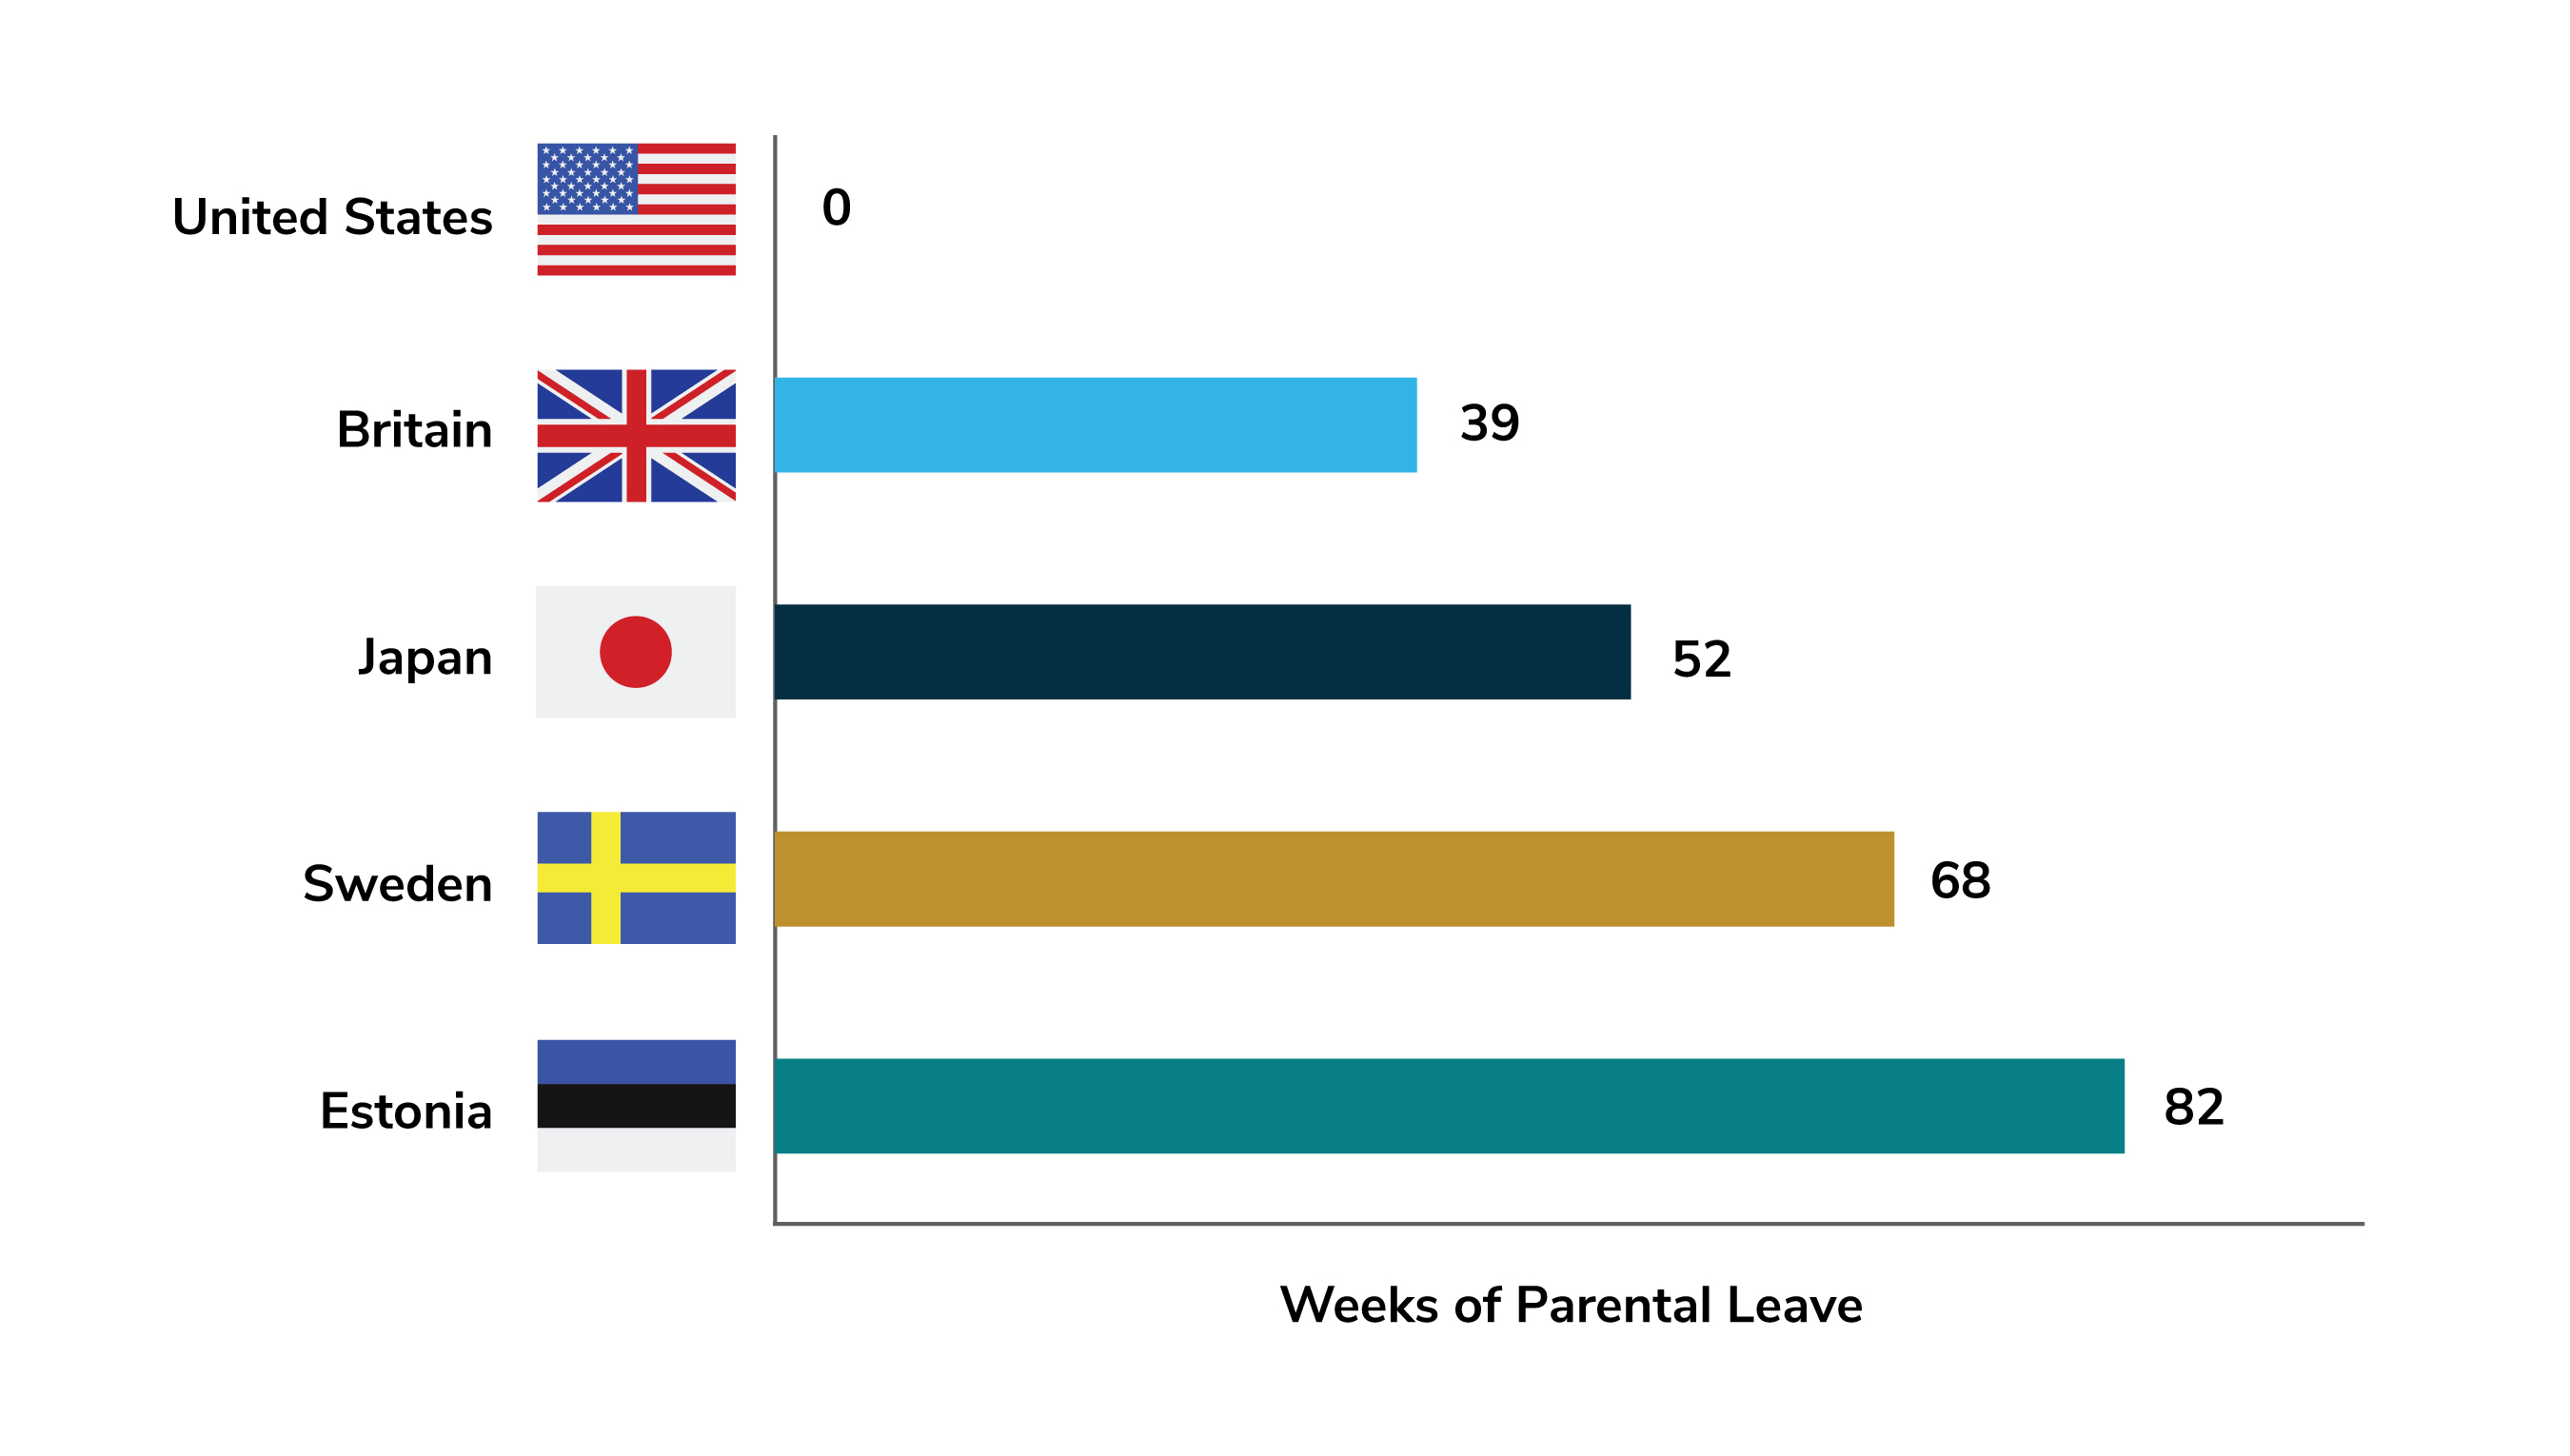 Weeks of parental leave by country